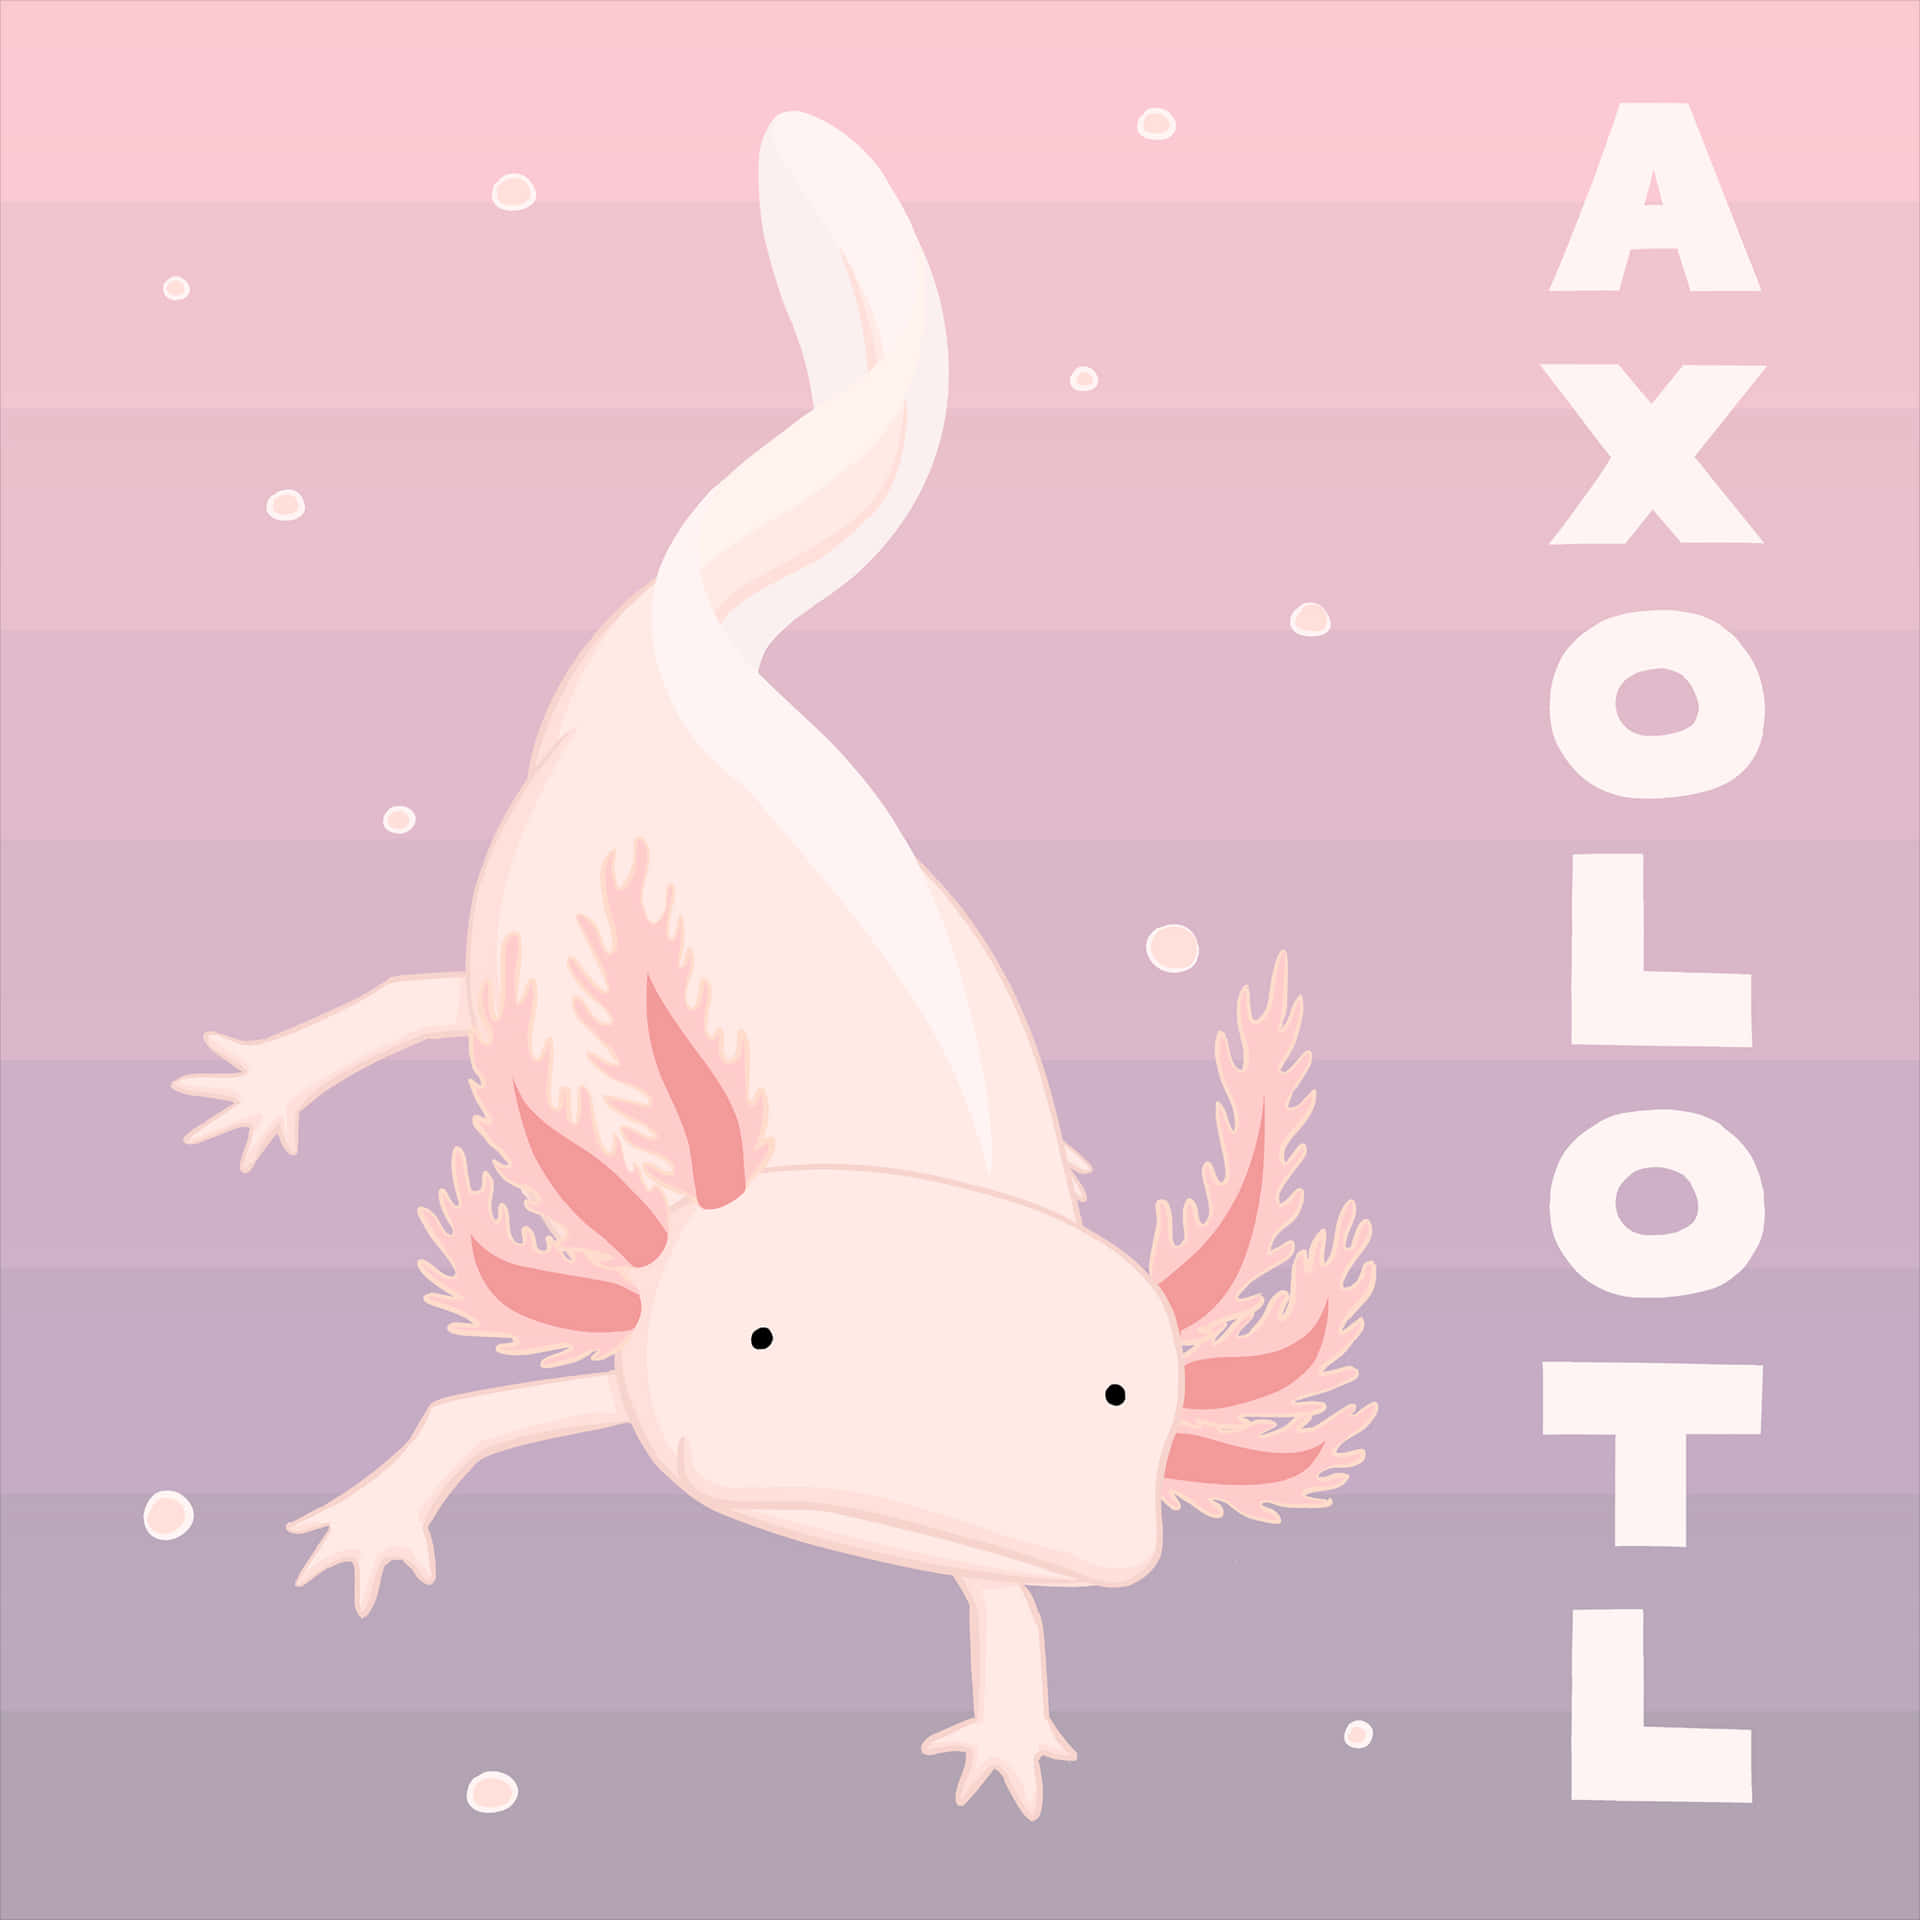 An adorable axolotl looking up to the camera